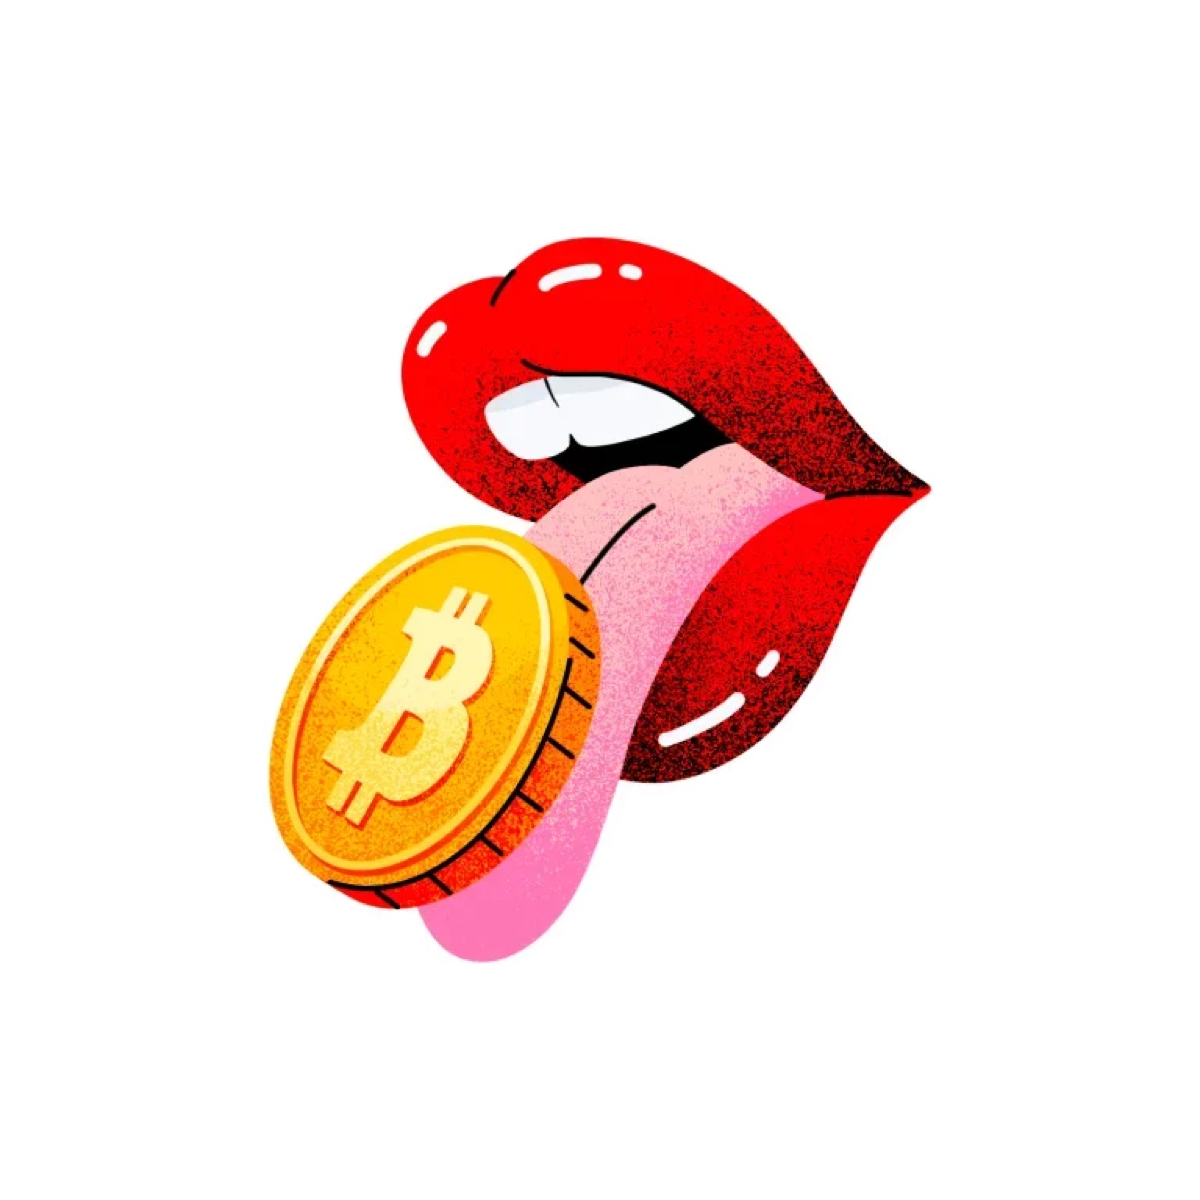 Bitcoin lips graphic